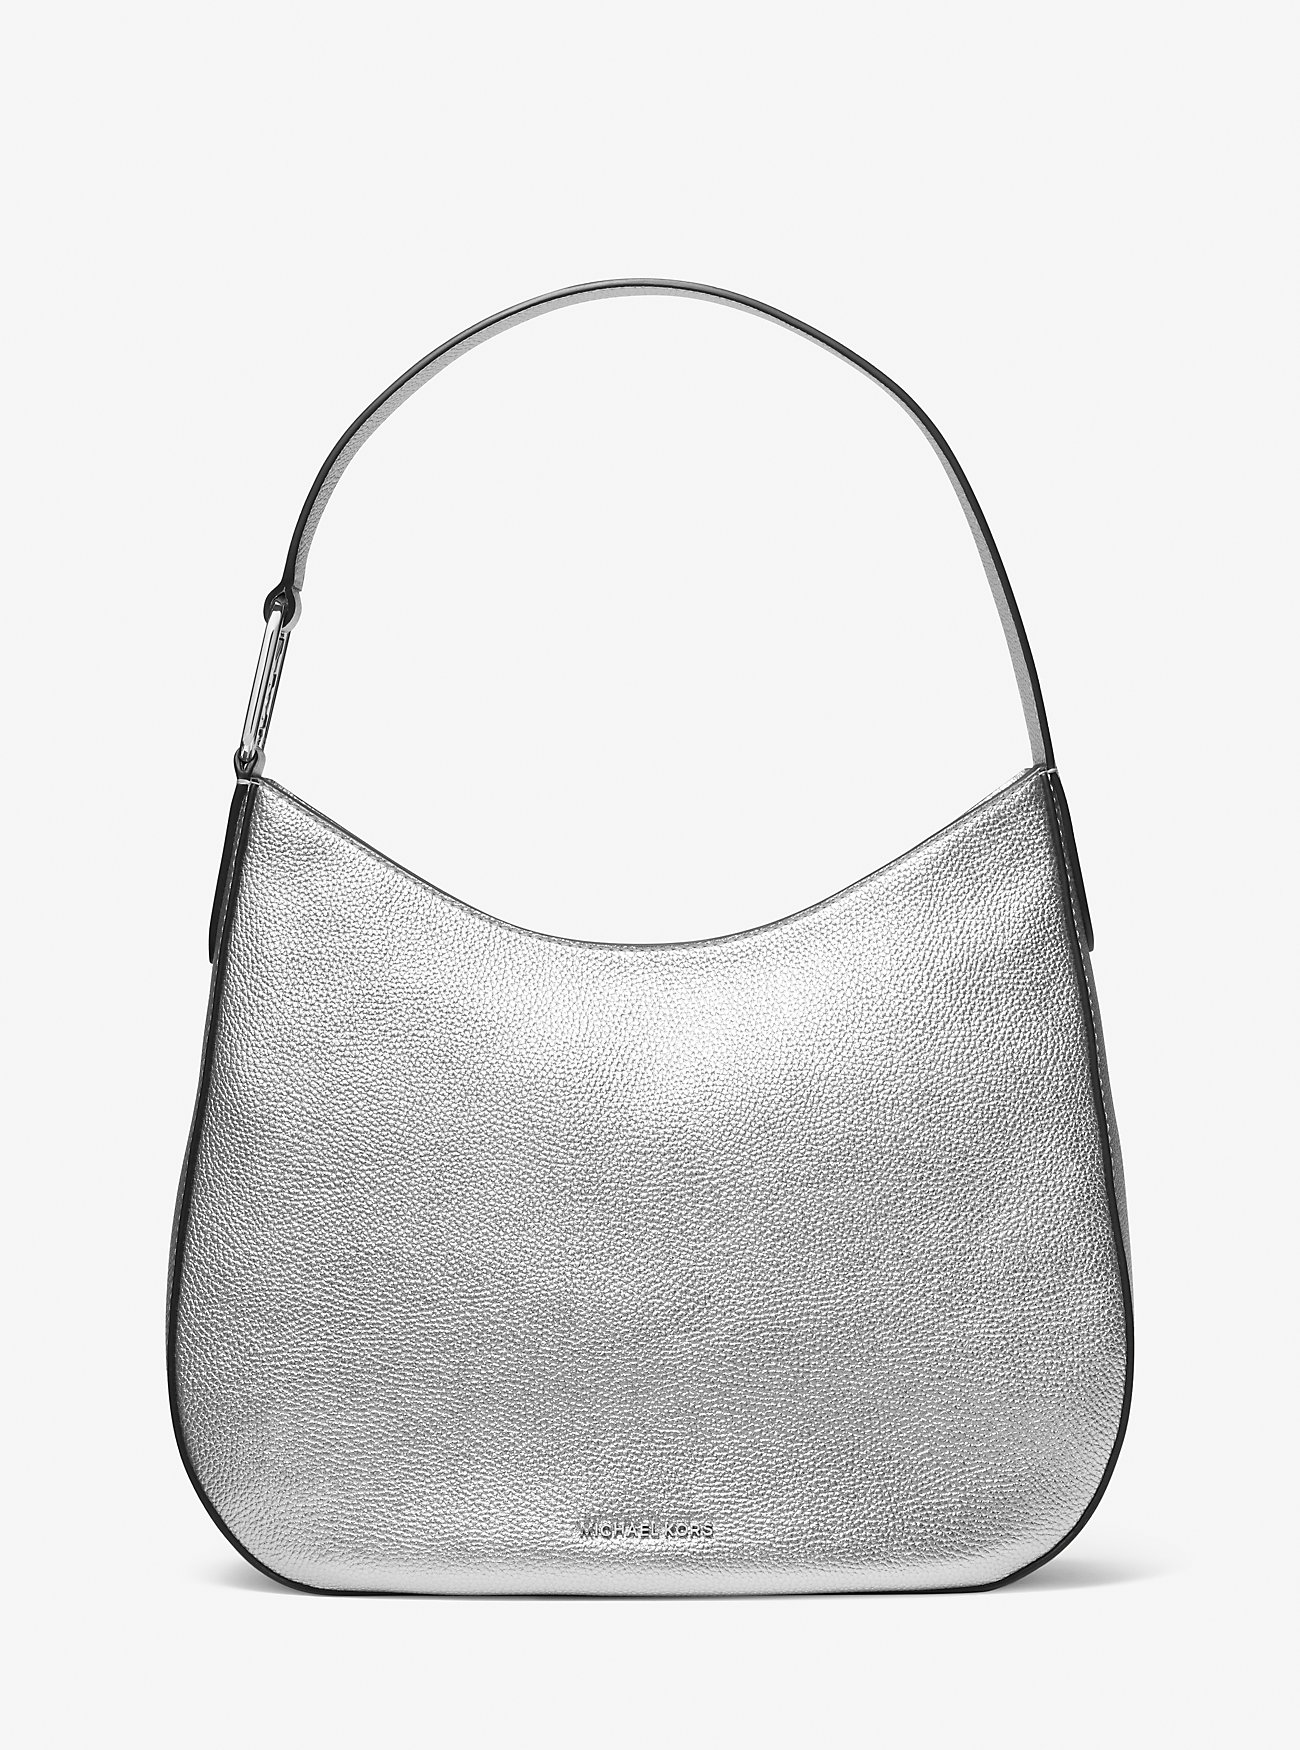 Michaelkors Kensington Large Metallic Leather Hobo Shoulder Bag